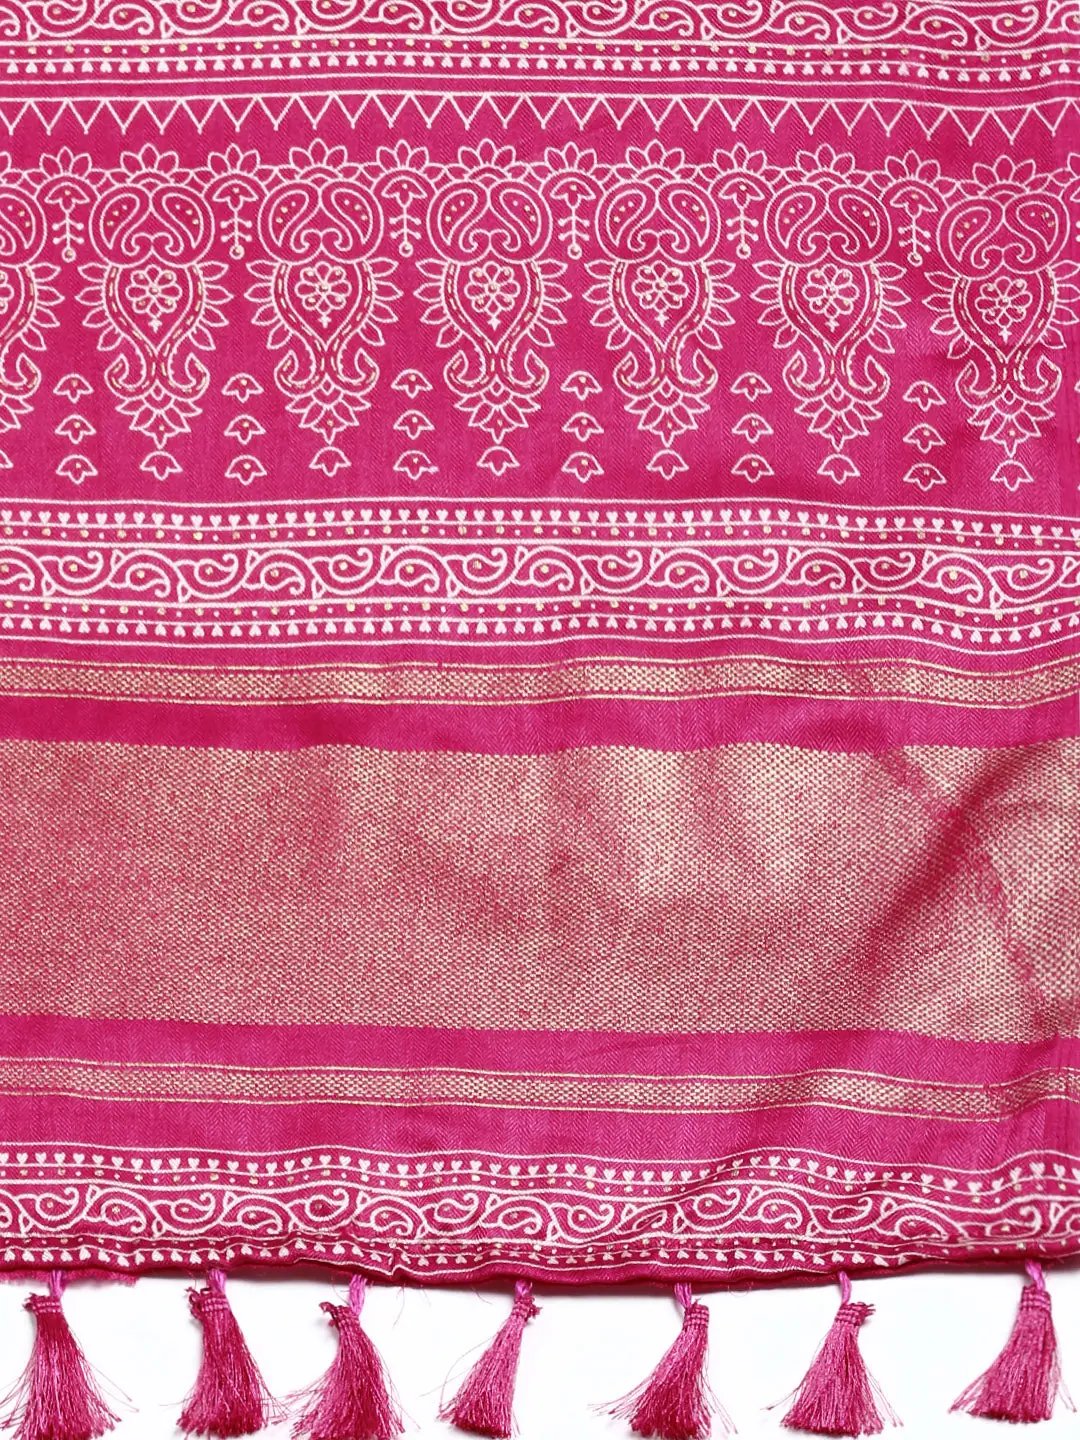 Designer Soft Manipuri Silk Foil Saree for Festive Wear